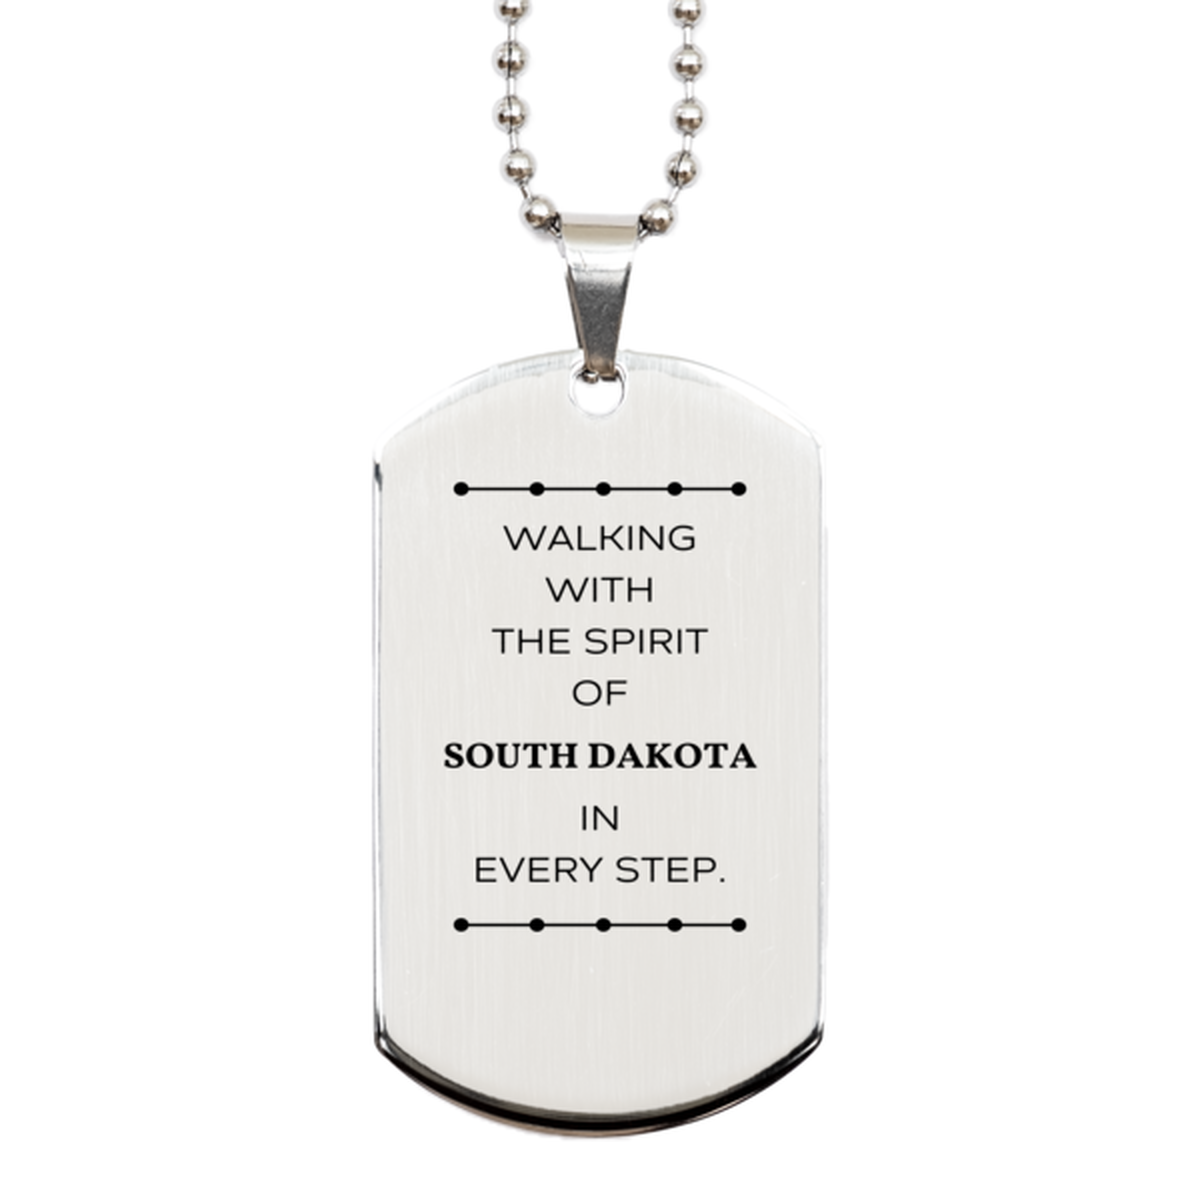 South Dakota Gifts, Walking with the spirit, Love South Dakota Birthday Christmas Silver Dog Tag For South Dakota People, Men, Women, Friends